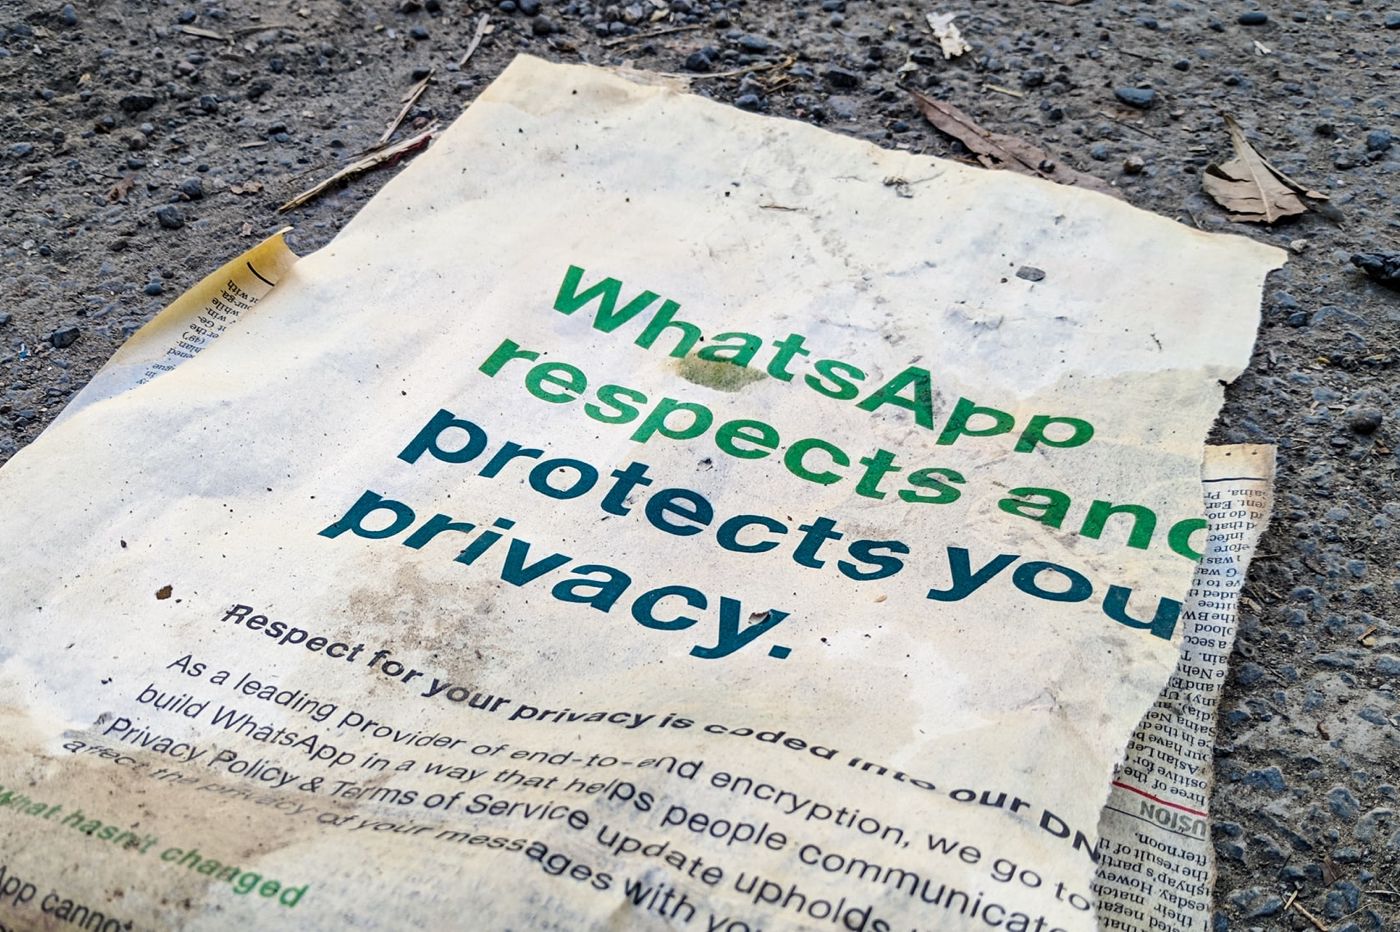 WhatsApp et vie privée